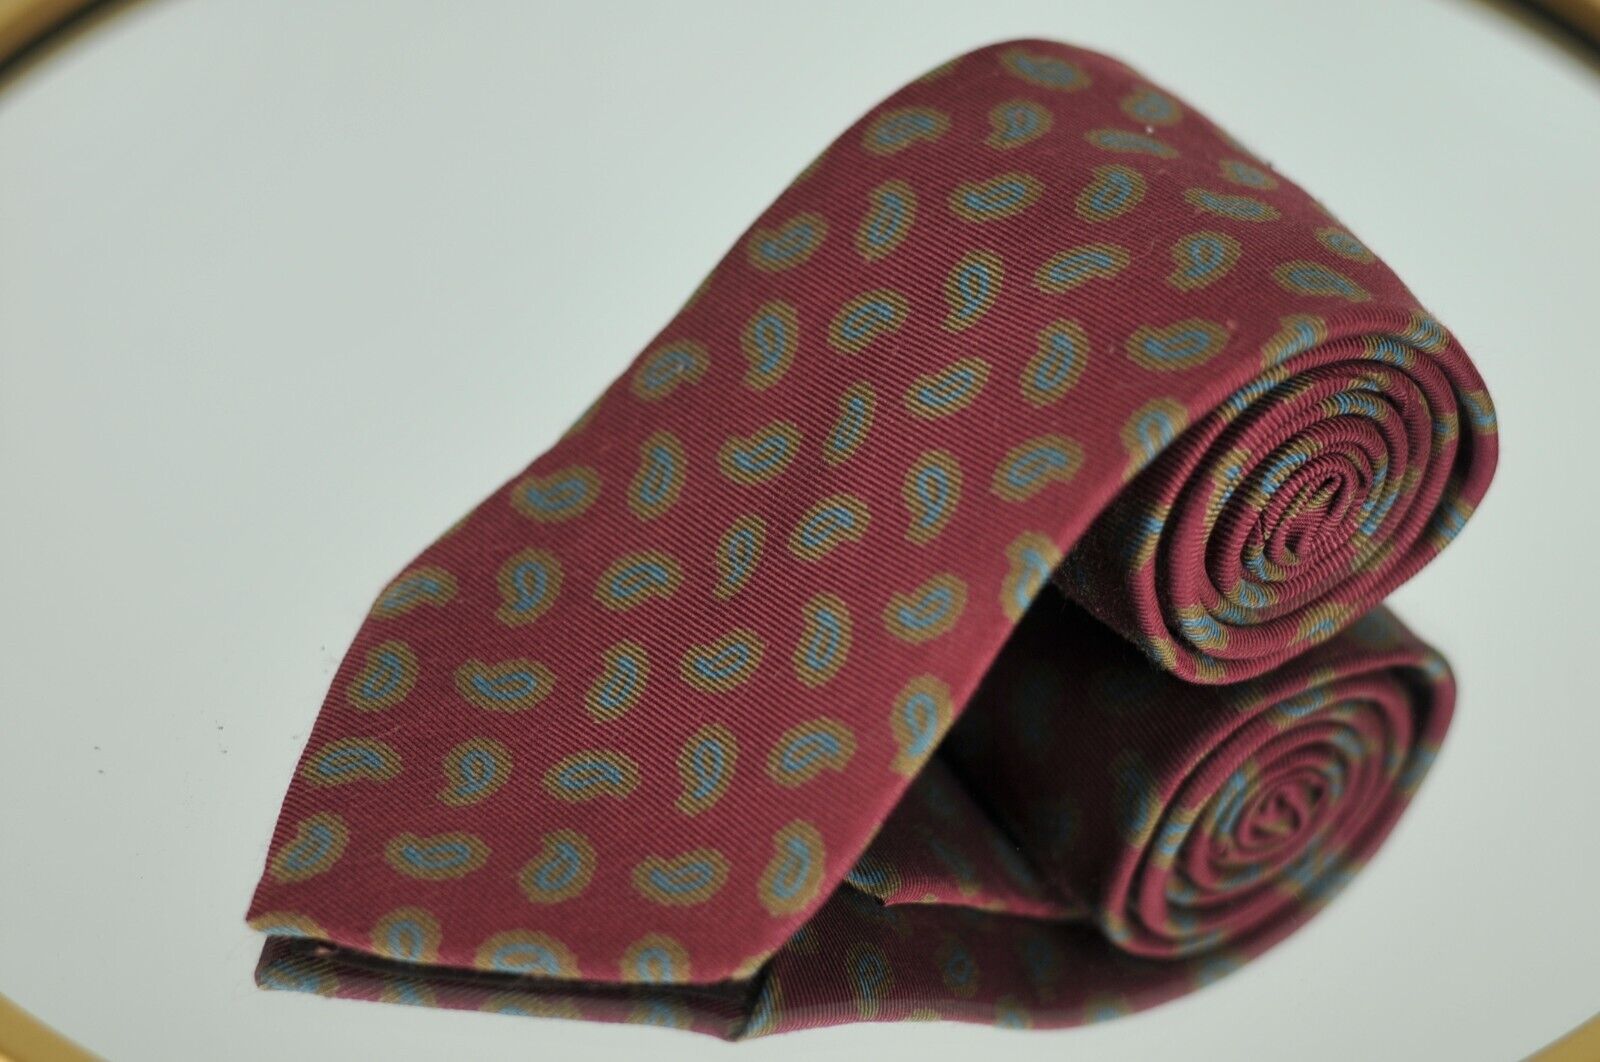 Etro Men\'s Tie Burgundy Brown & Jade Paisley Printed Silk Necktie 60 x 3.75 in